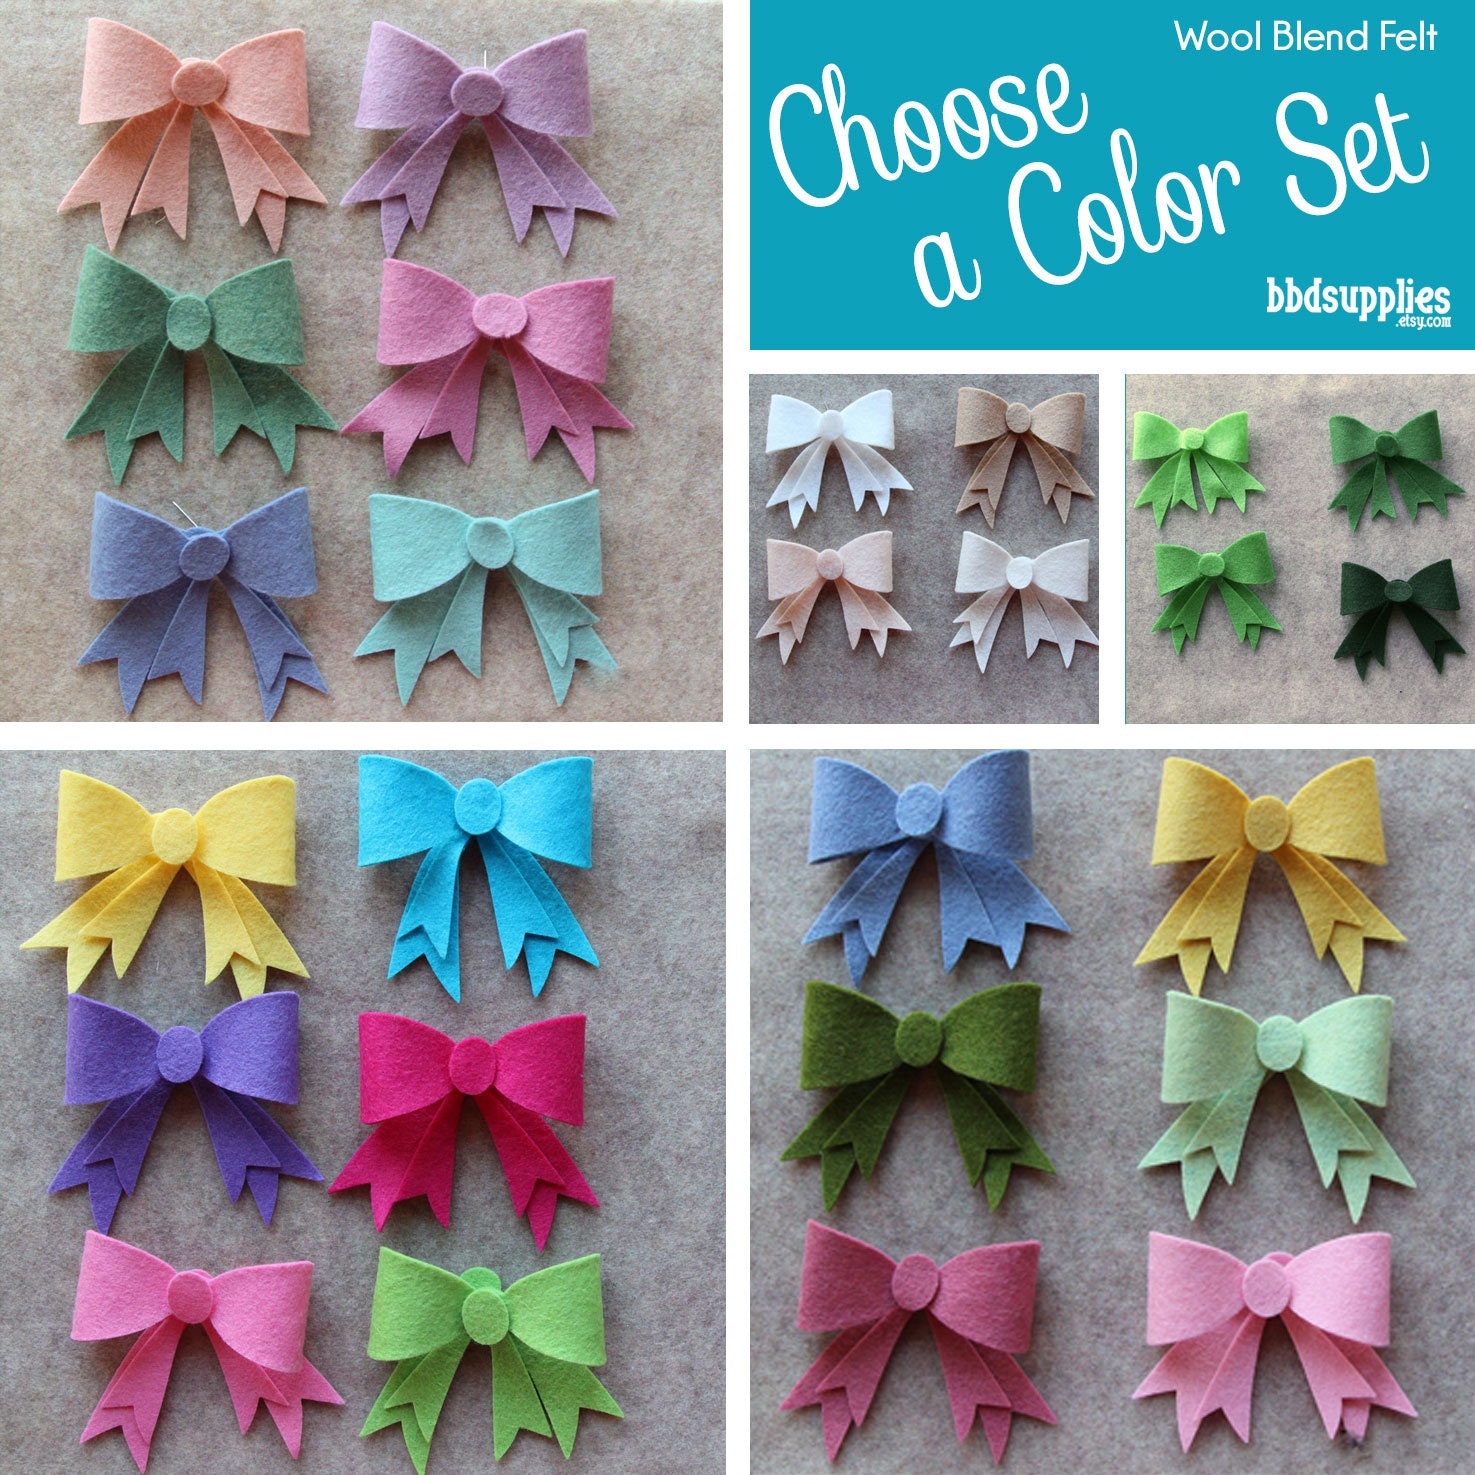 Wool Blend Felt Shapes | 12 Bows Style 2 Pick A Color Set Diy